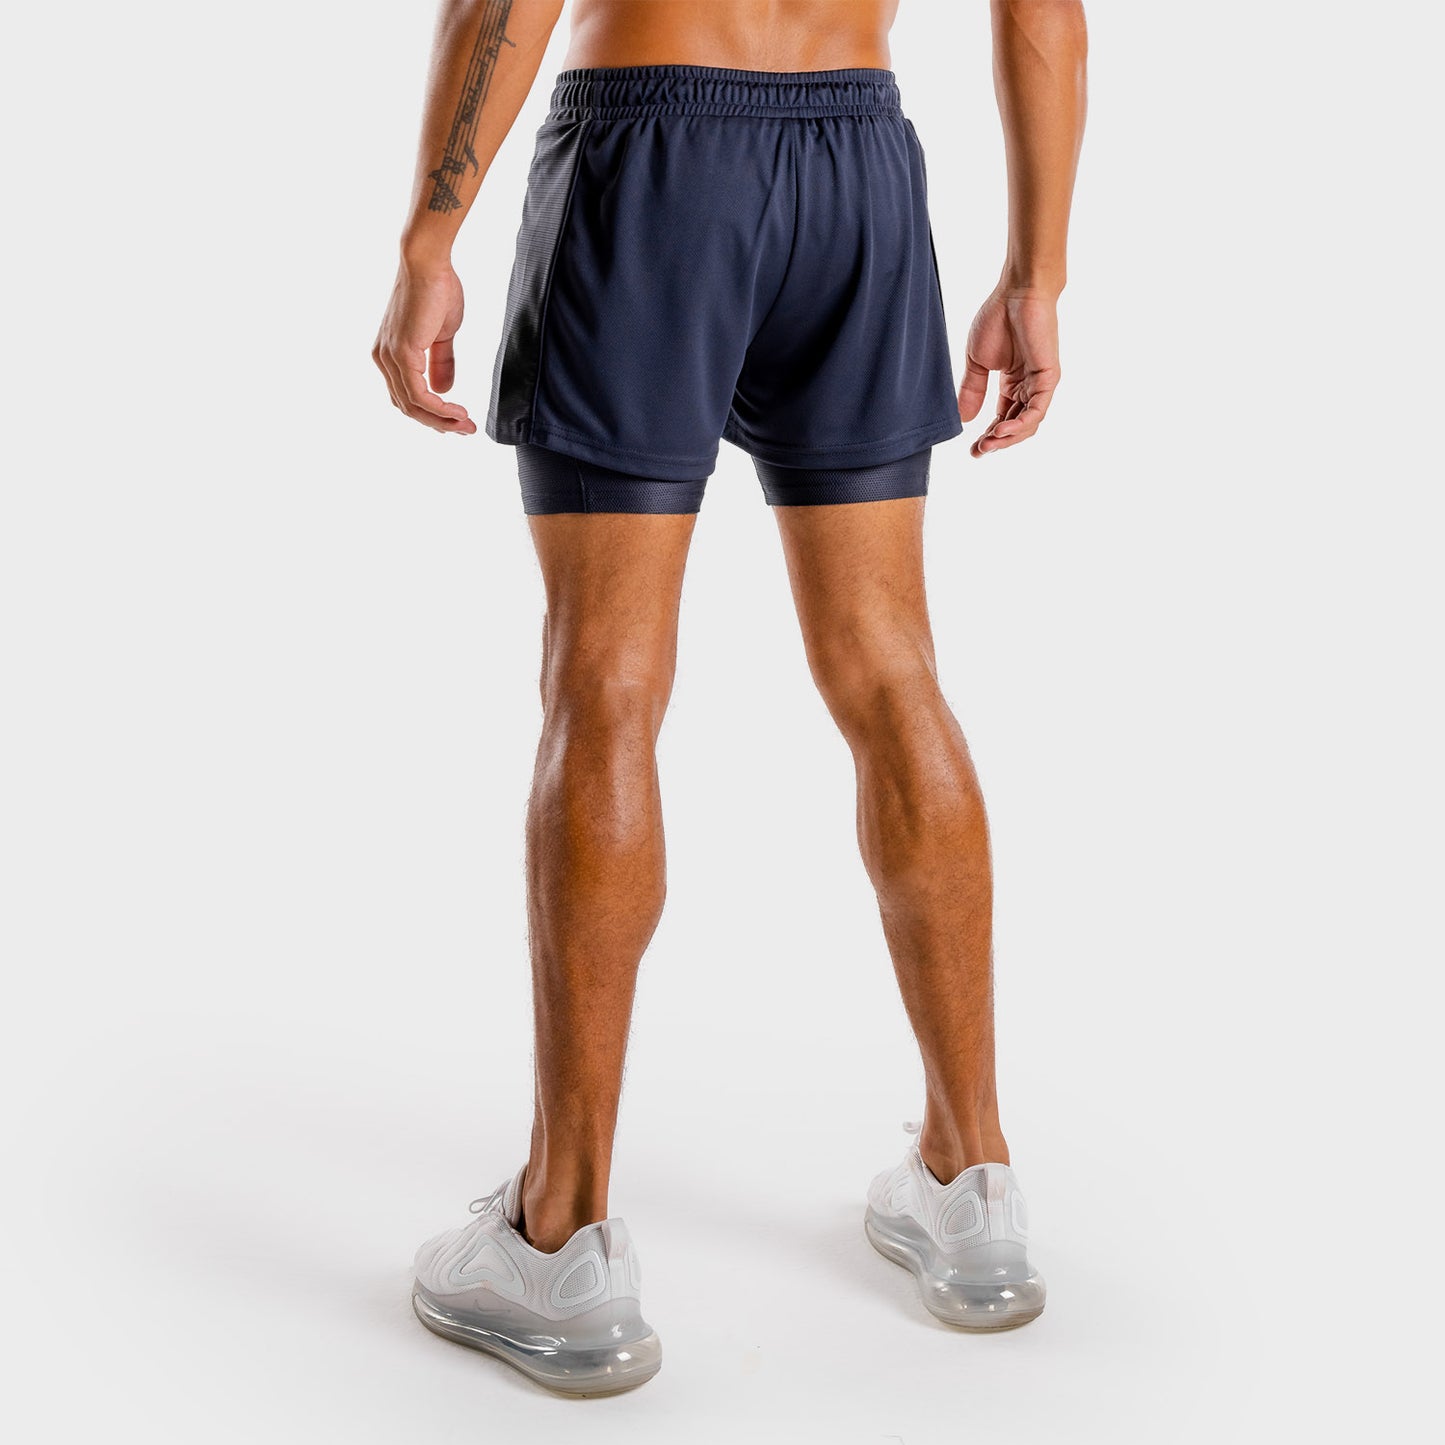 squatwolf-workout-short-for-men-hybrid-2-in-1-shorts-navy-gym-wear